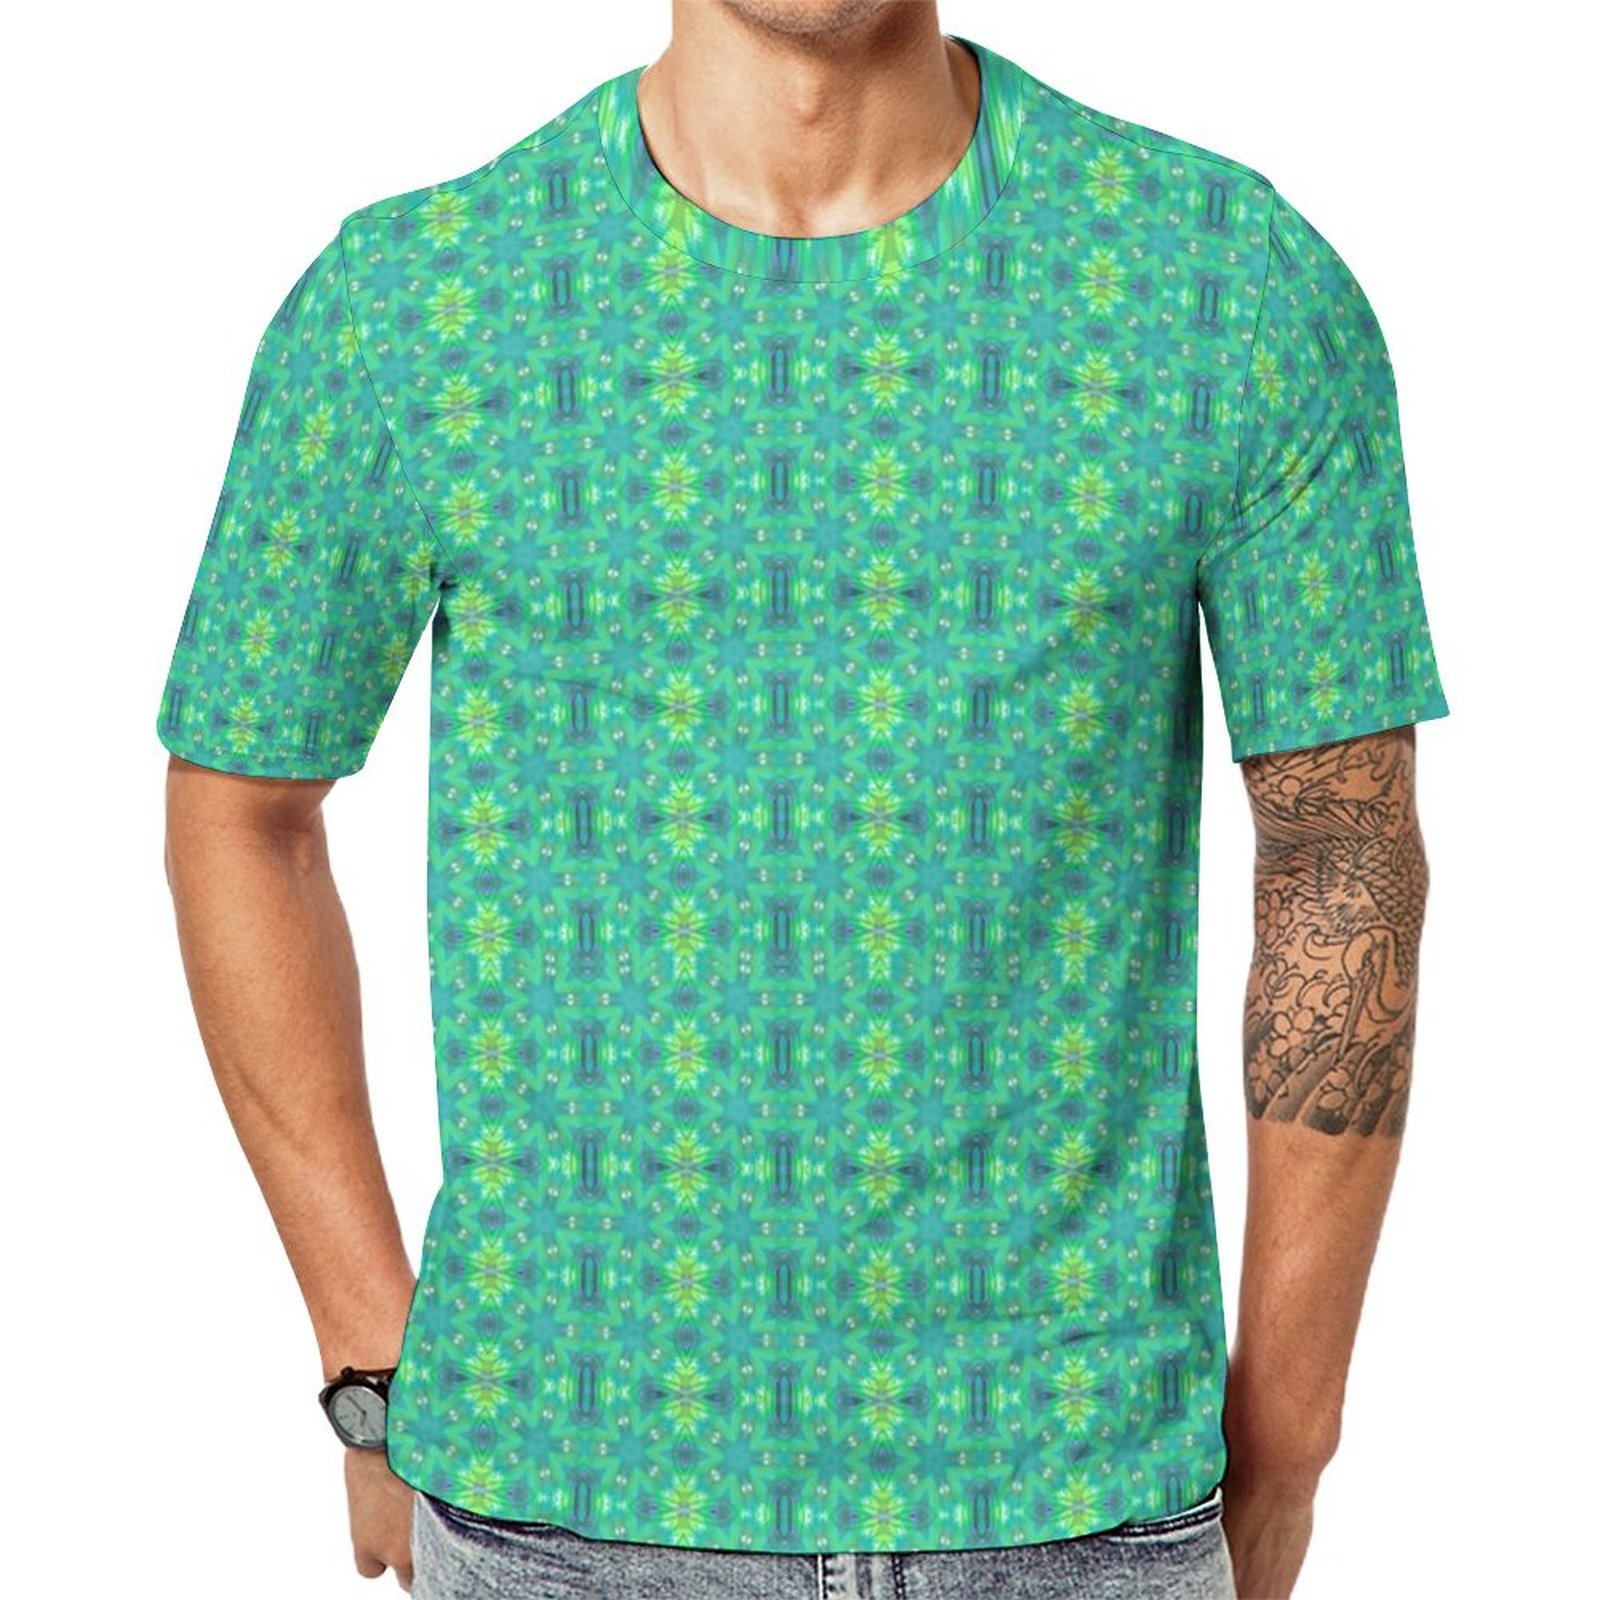 Geometric Art Short Sleeve Print Unisex Tshirt Summer Casual Tees for Men and Women Coolcoshirts